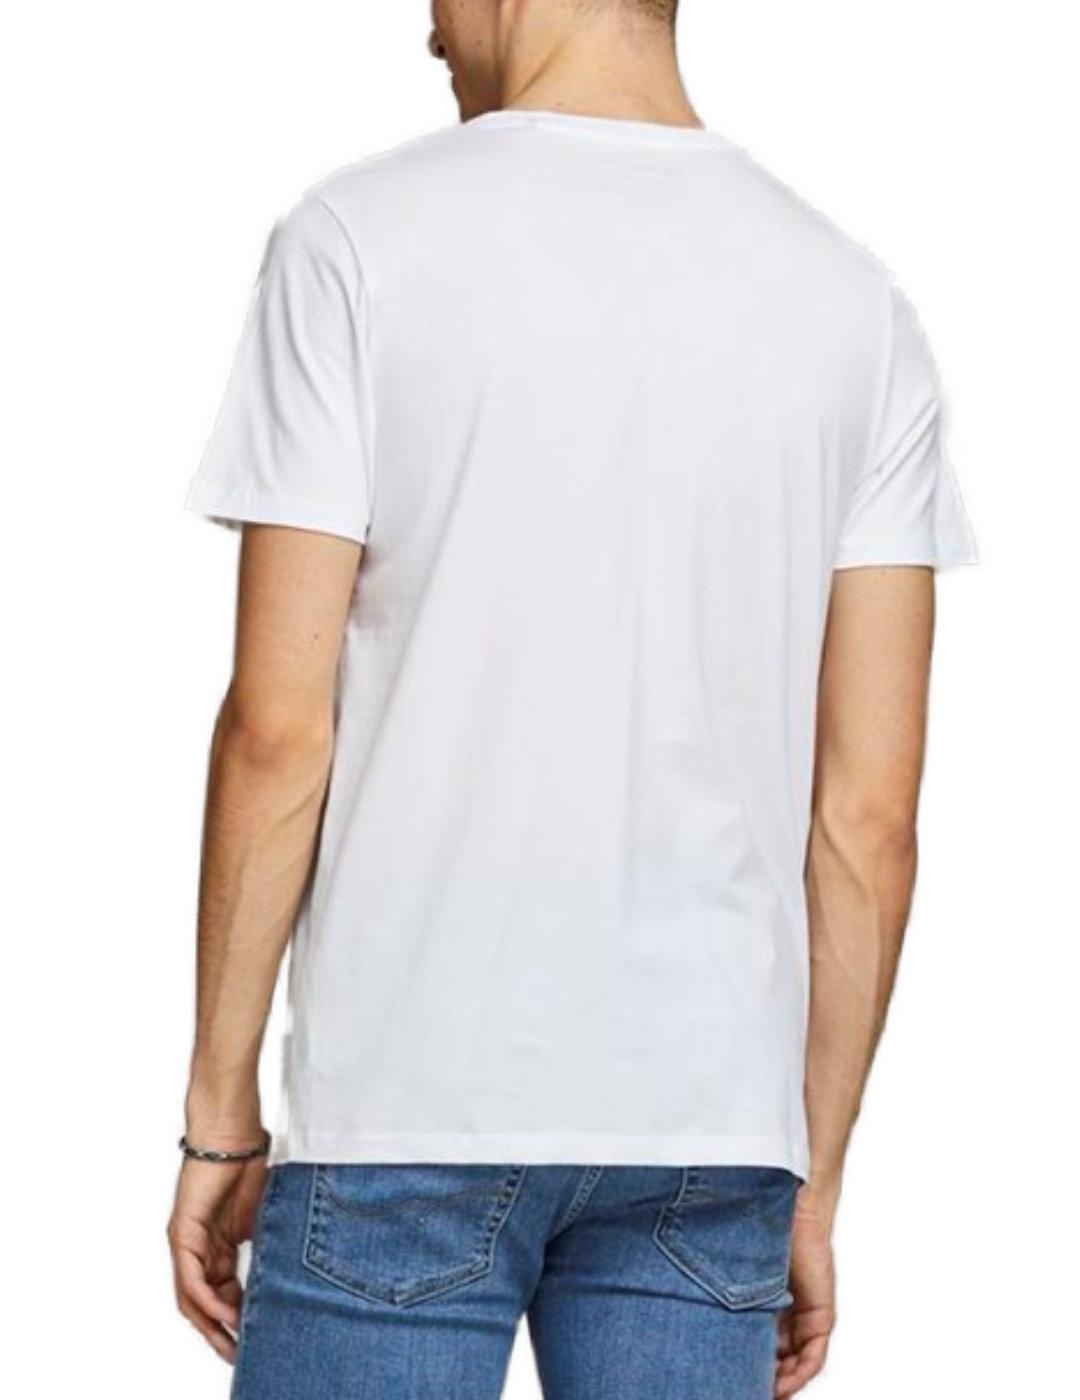 Camiseta Jack&Jones Logo blanca manga corta para hombre